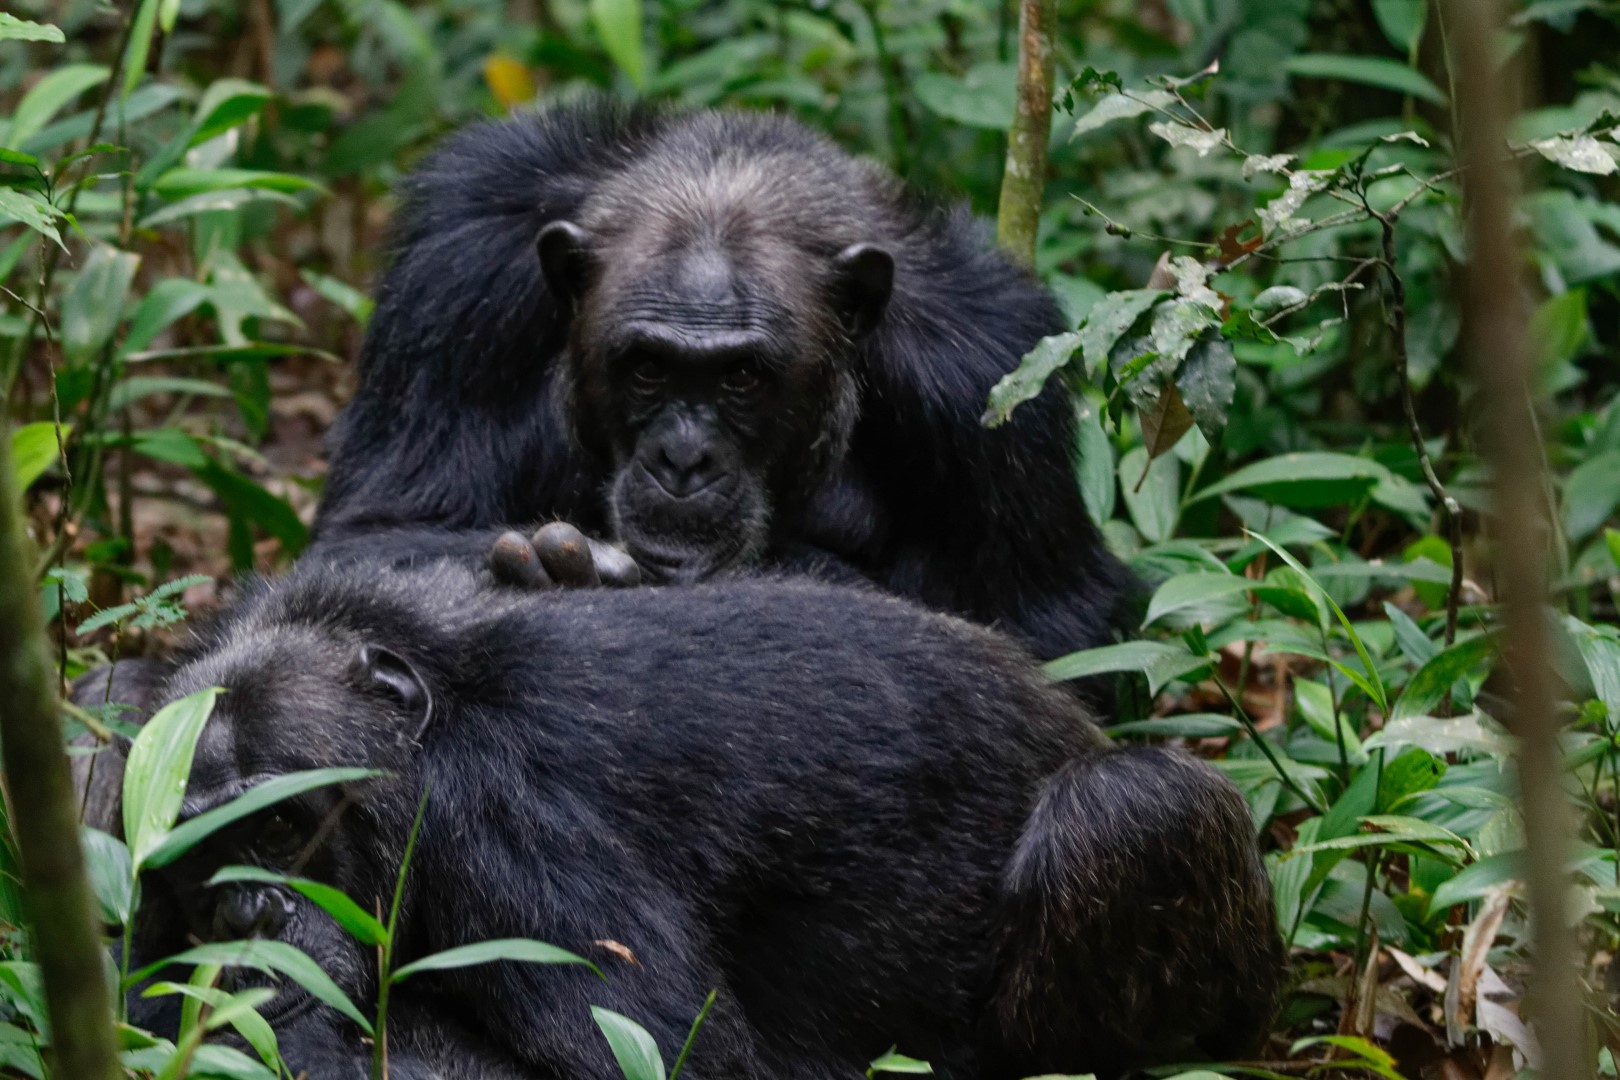 Caretaking chimpanzee plucking off ticks from another